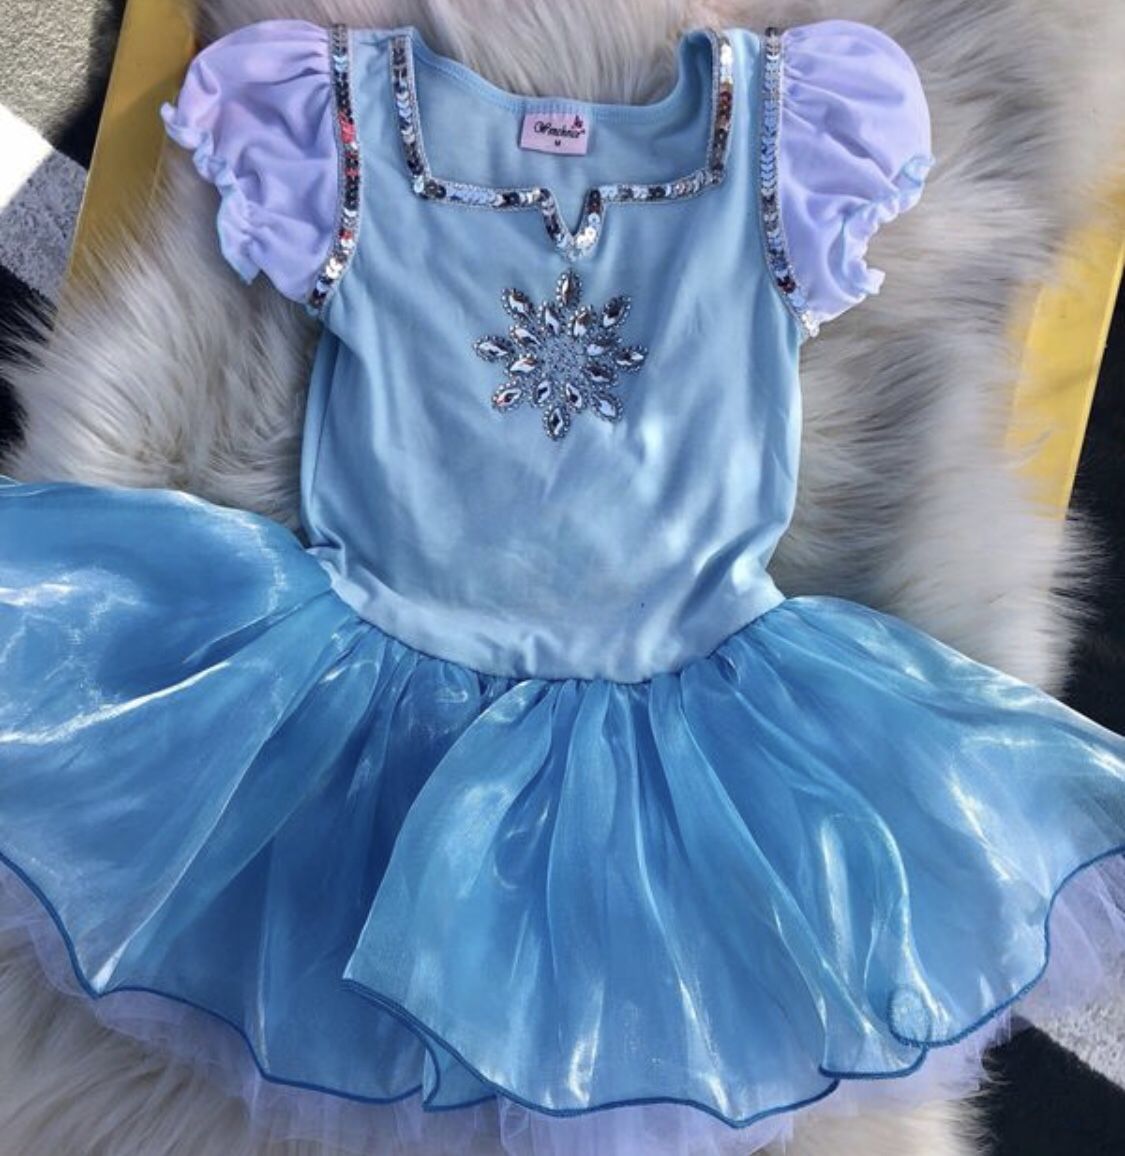 Elsa inspired tutu dress Costume ON SALE Size 5-7